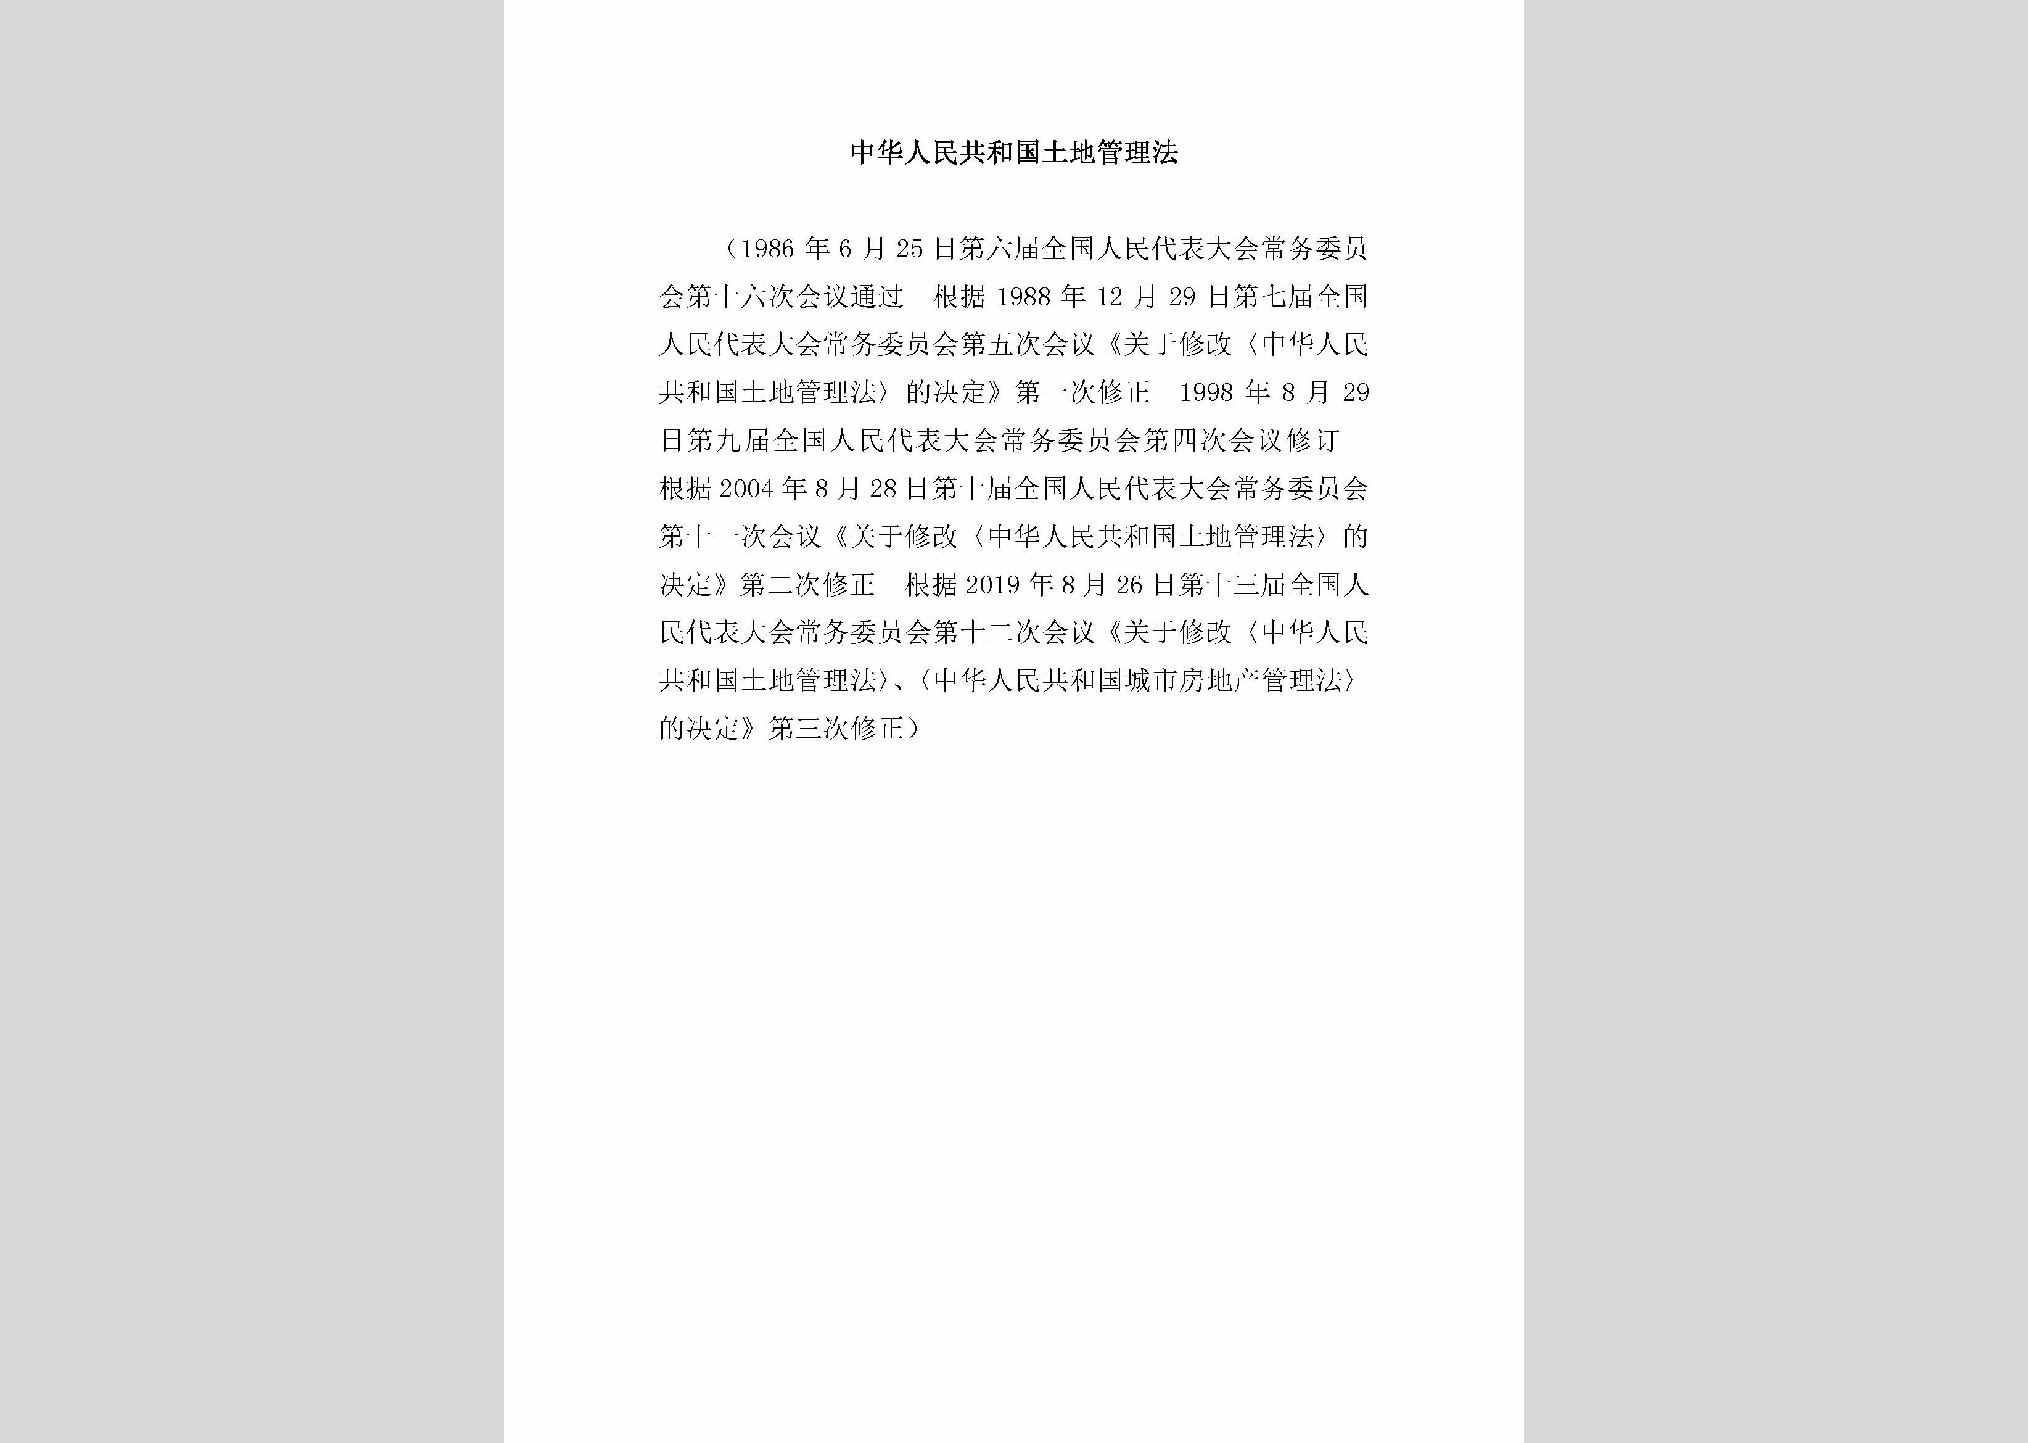 ZHRMGHGTD：中华人民共和国土地管理法